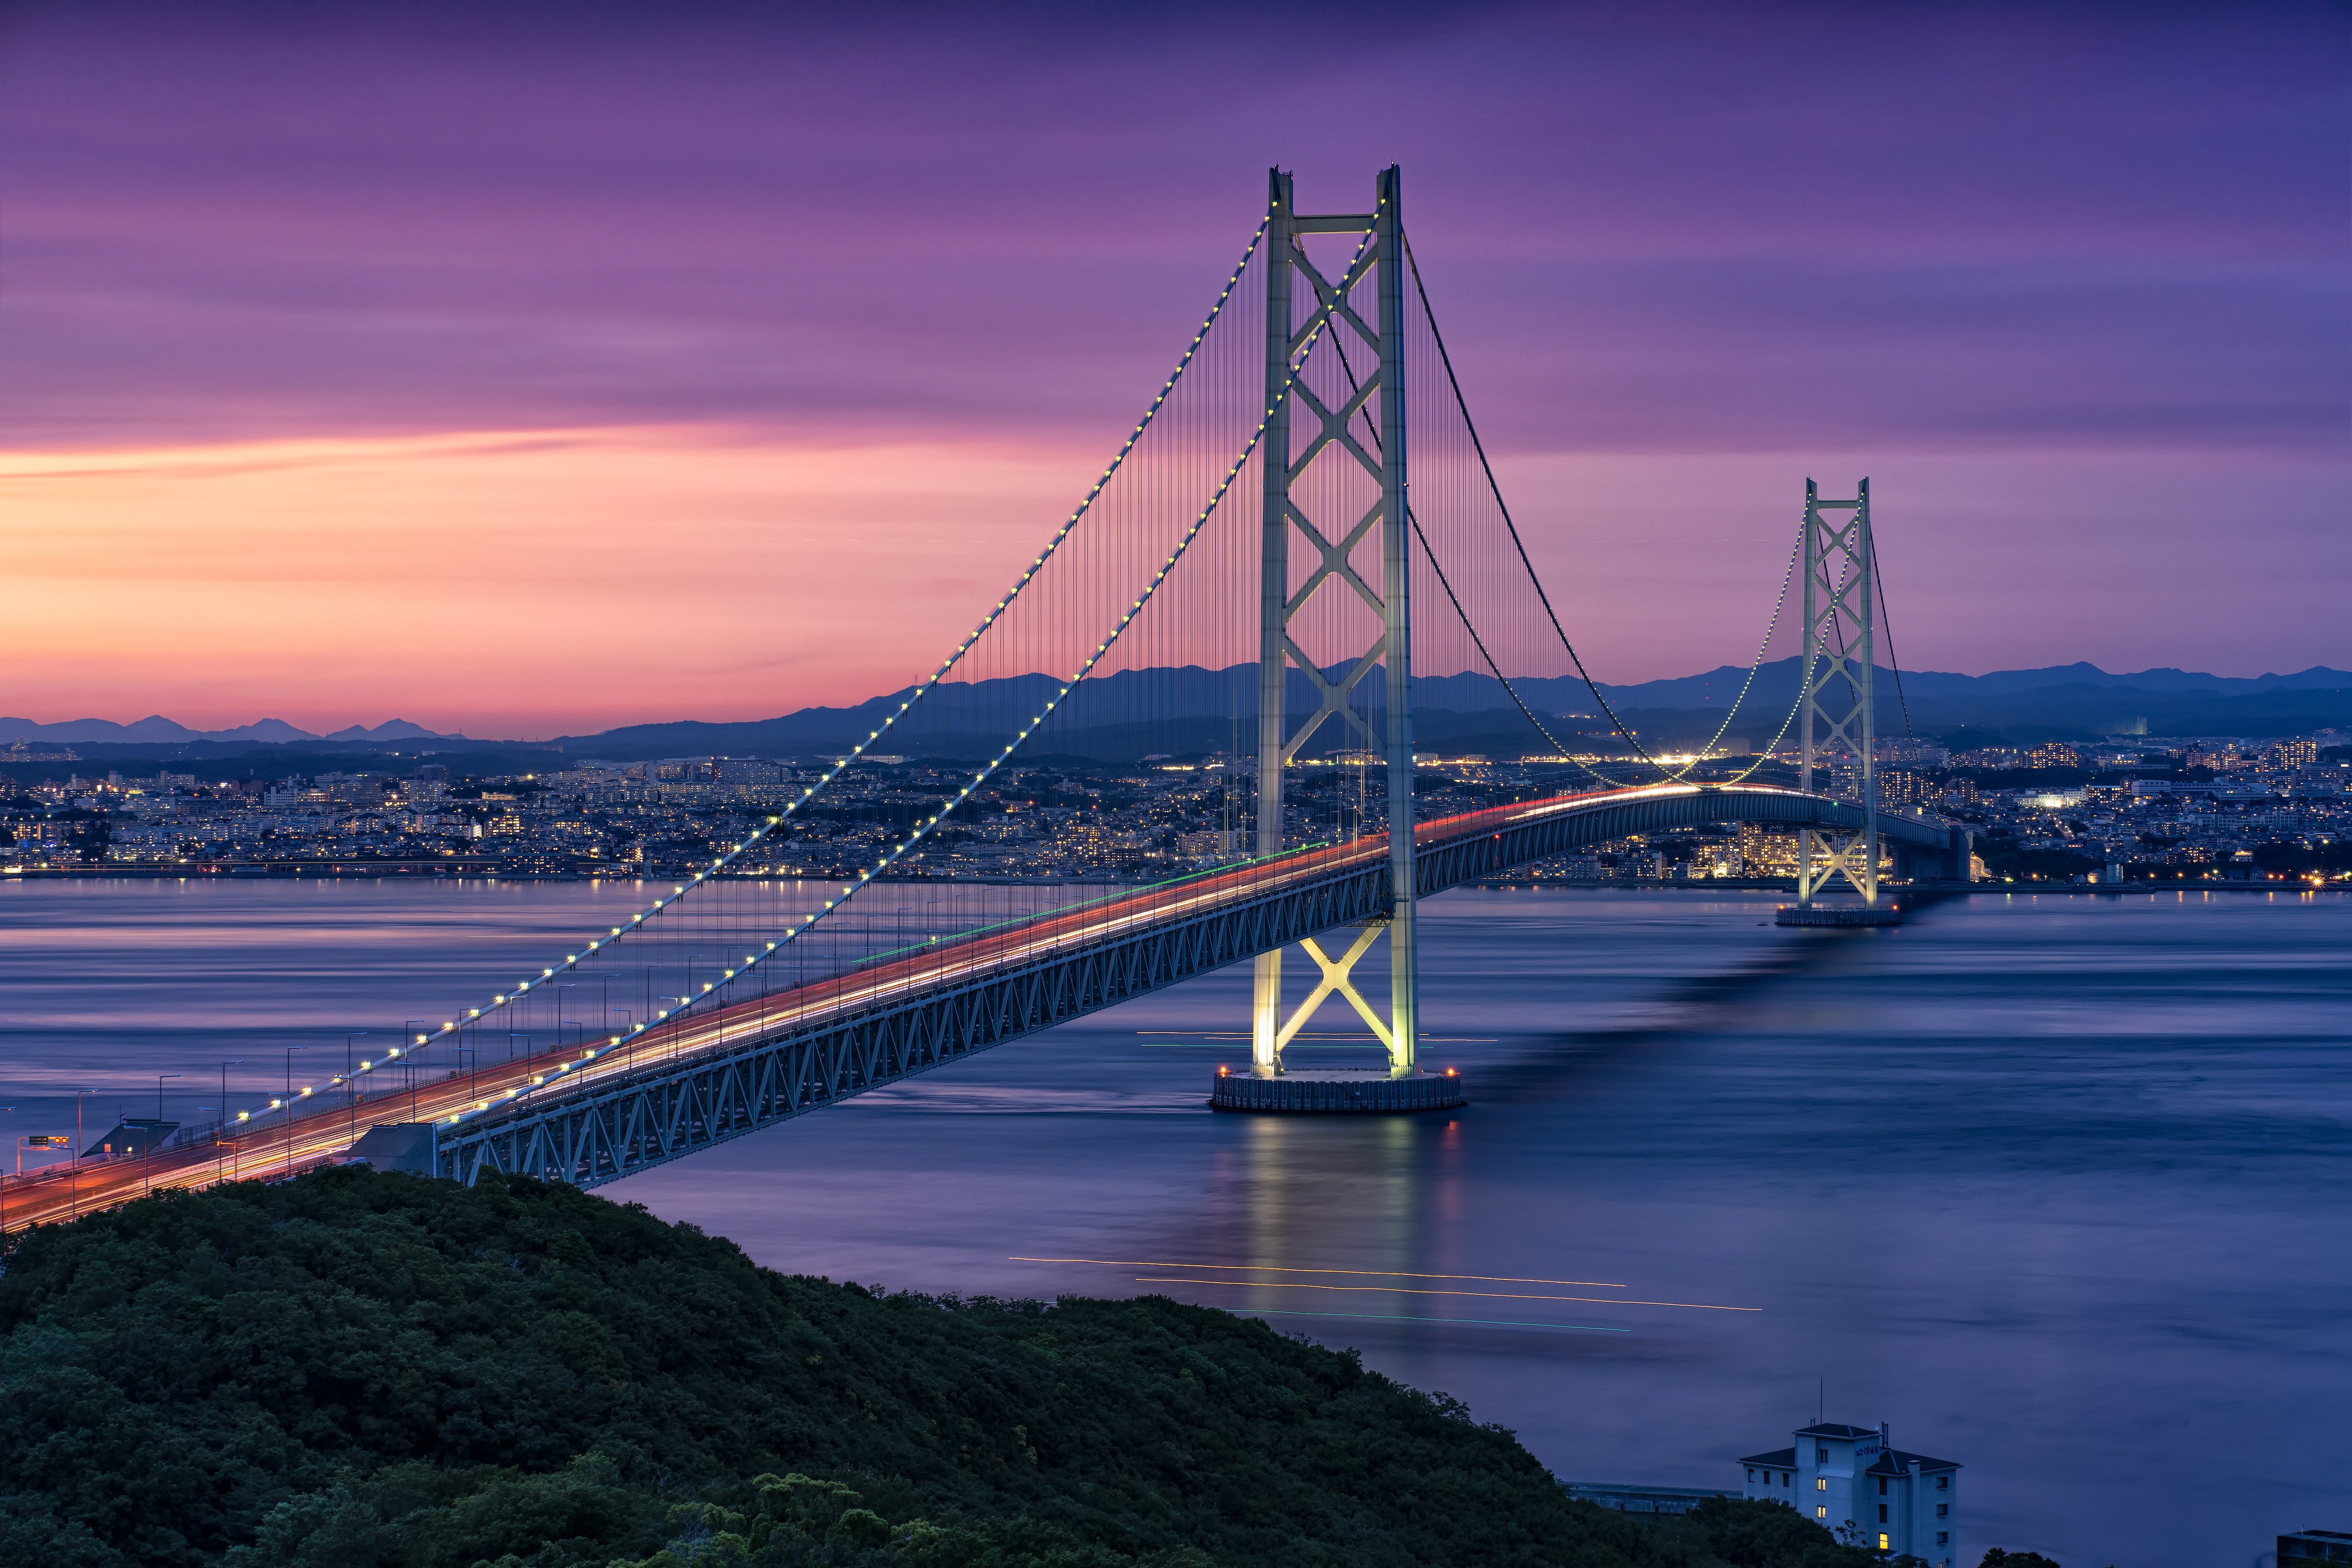 Сан франциско какой. Мост акаси в Японии. Мост акаси-кайкё. Мост ака́си-кайкё (Япония). Акаси-кайкё – висячий мост в Японии.